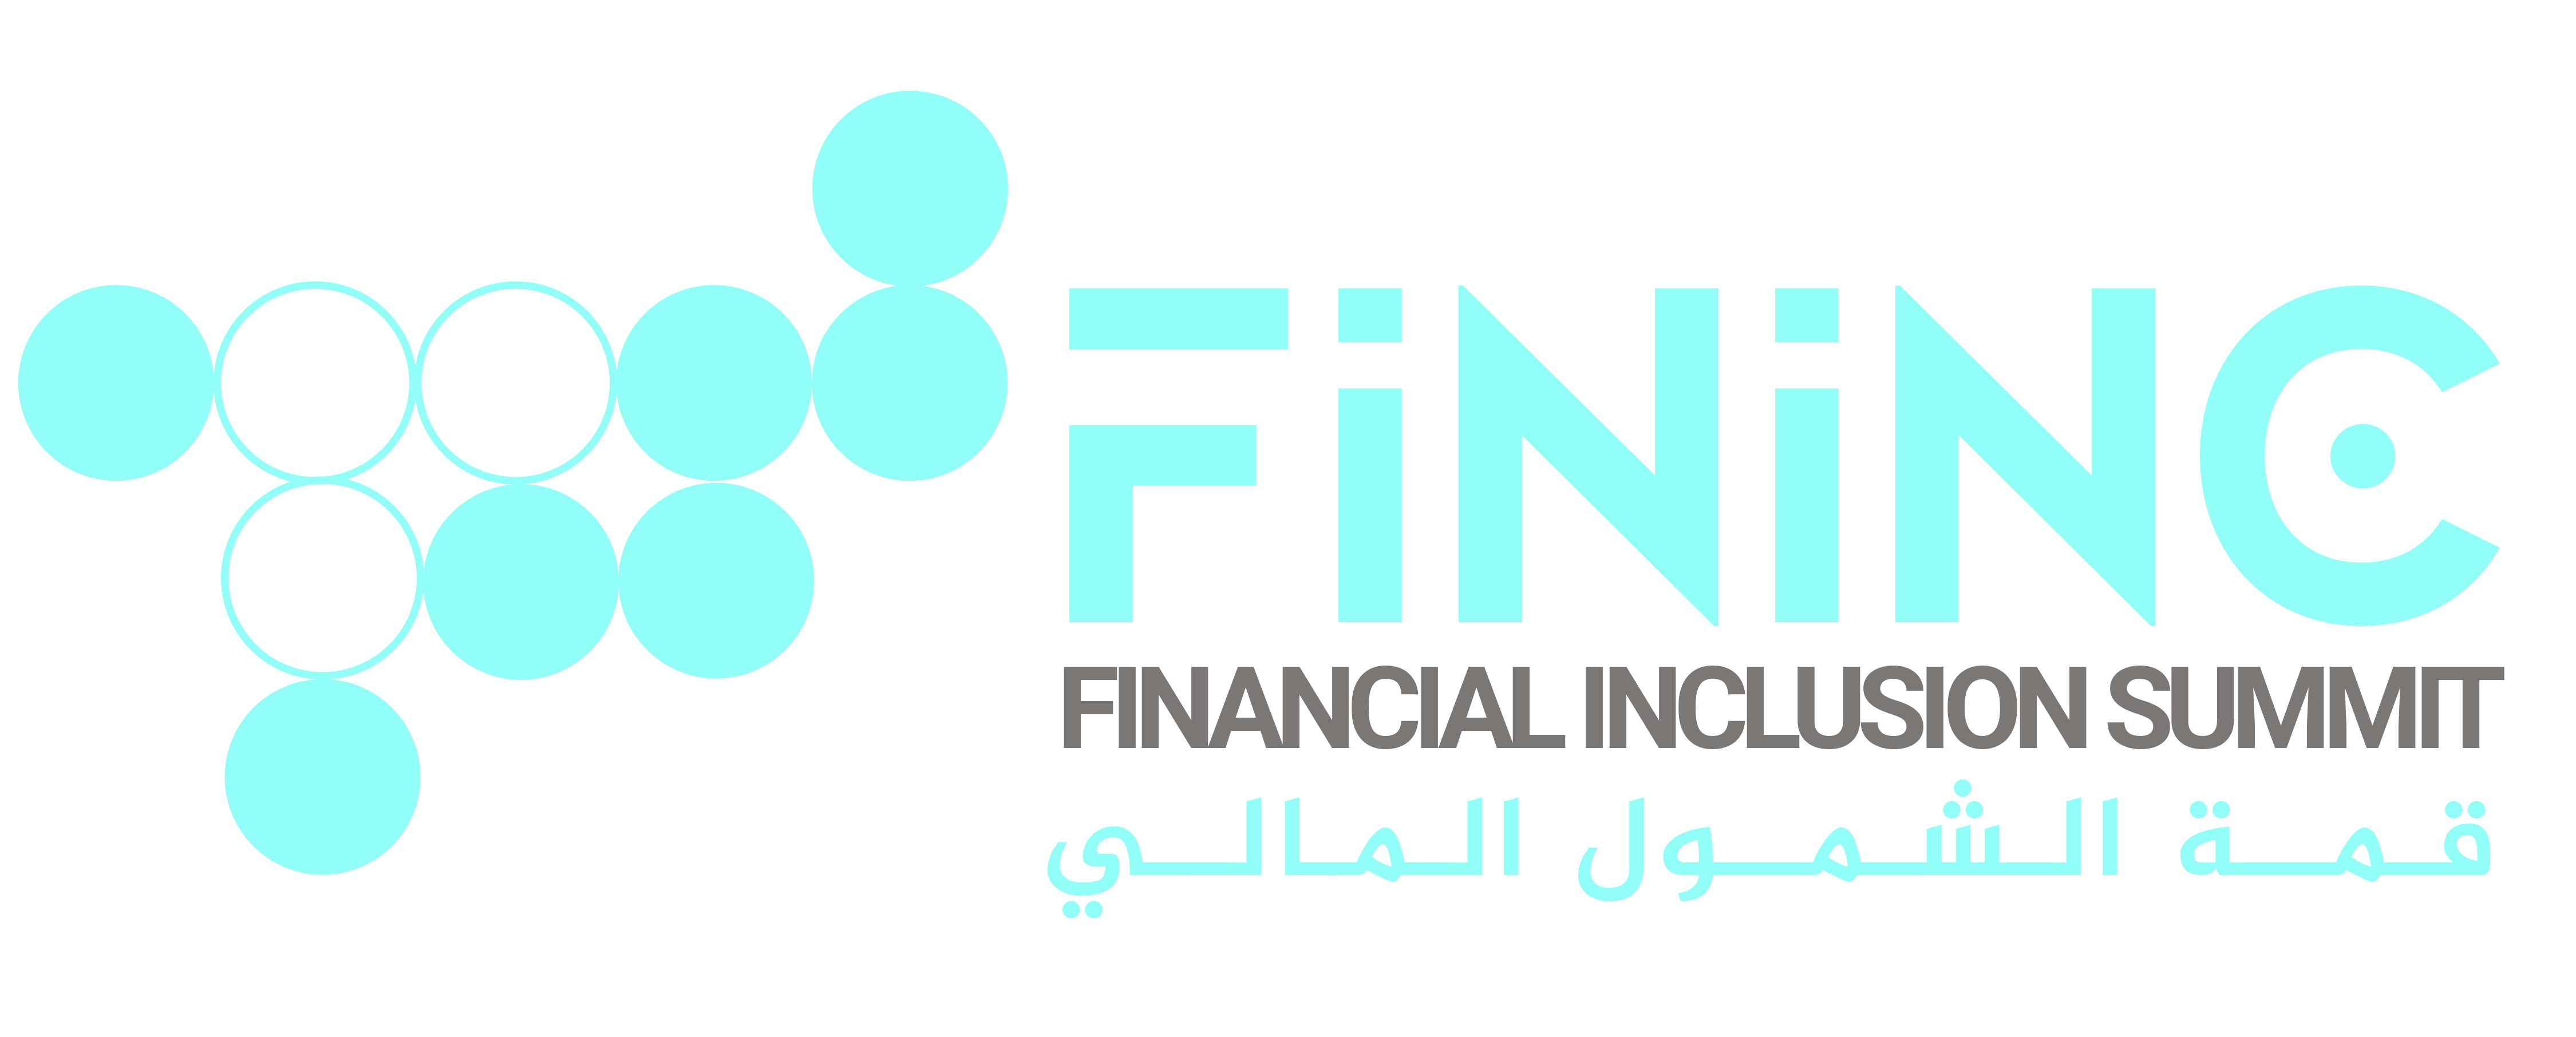 Financial Inclusion Summit